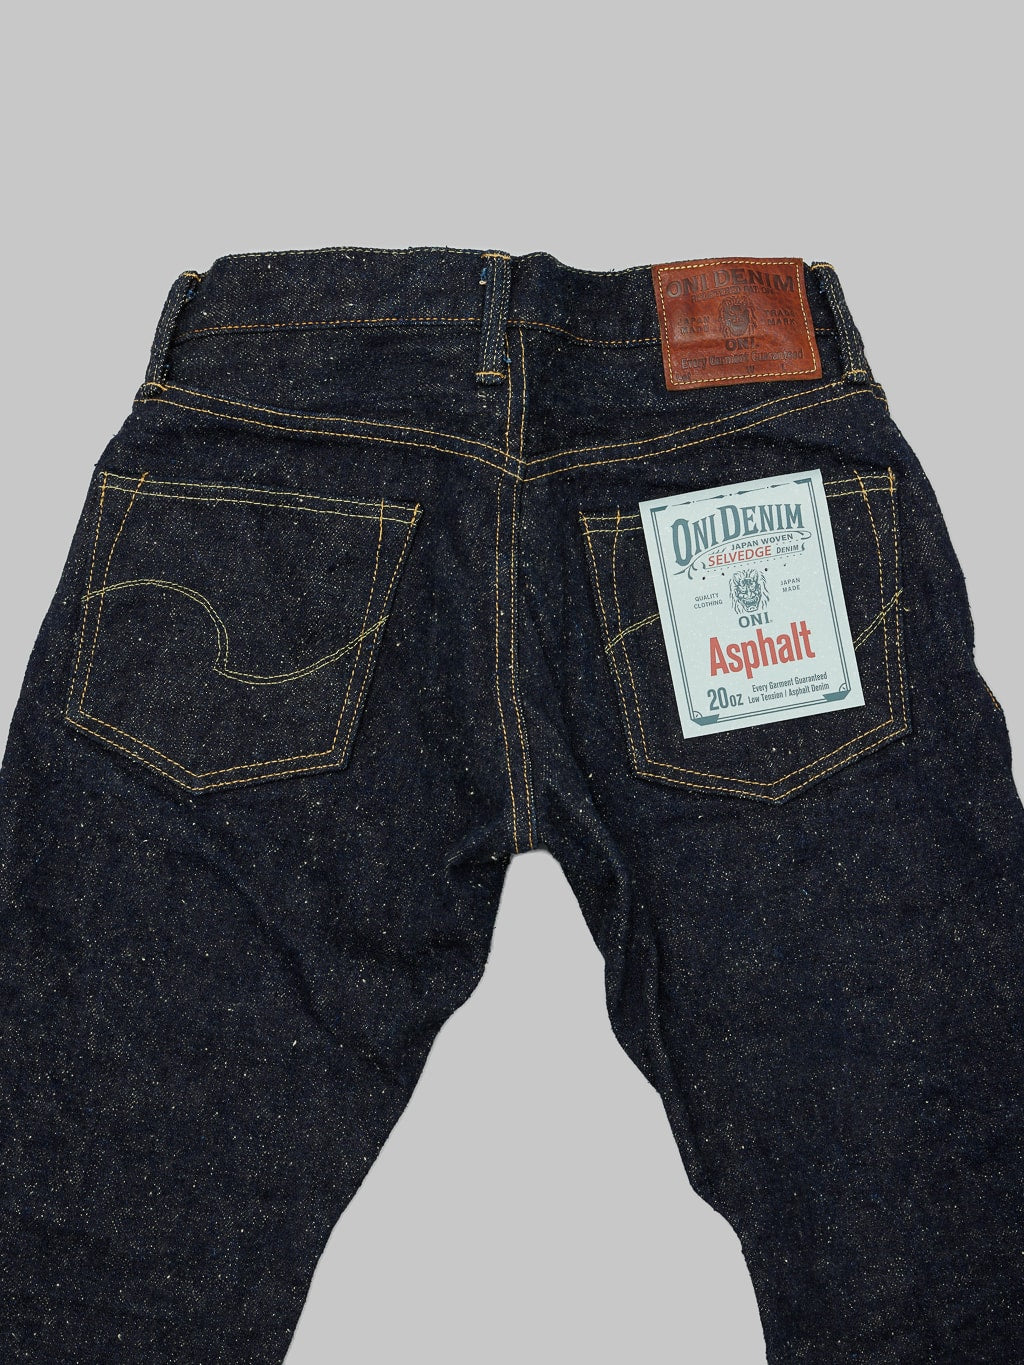 ONI Denim 288 Asphalt 20oz Regular Straight Jeans back detail